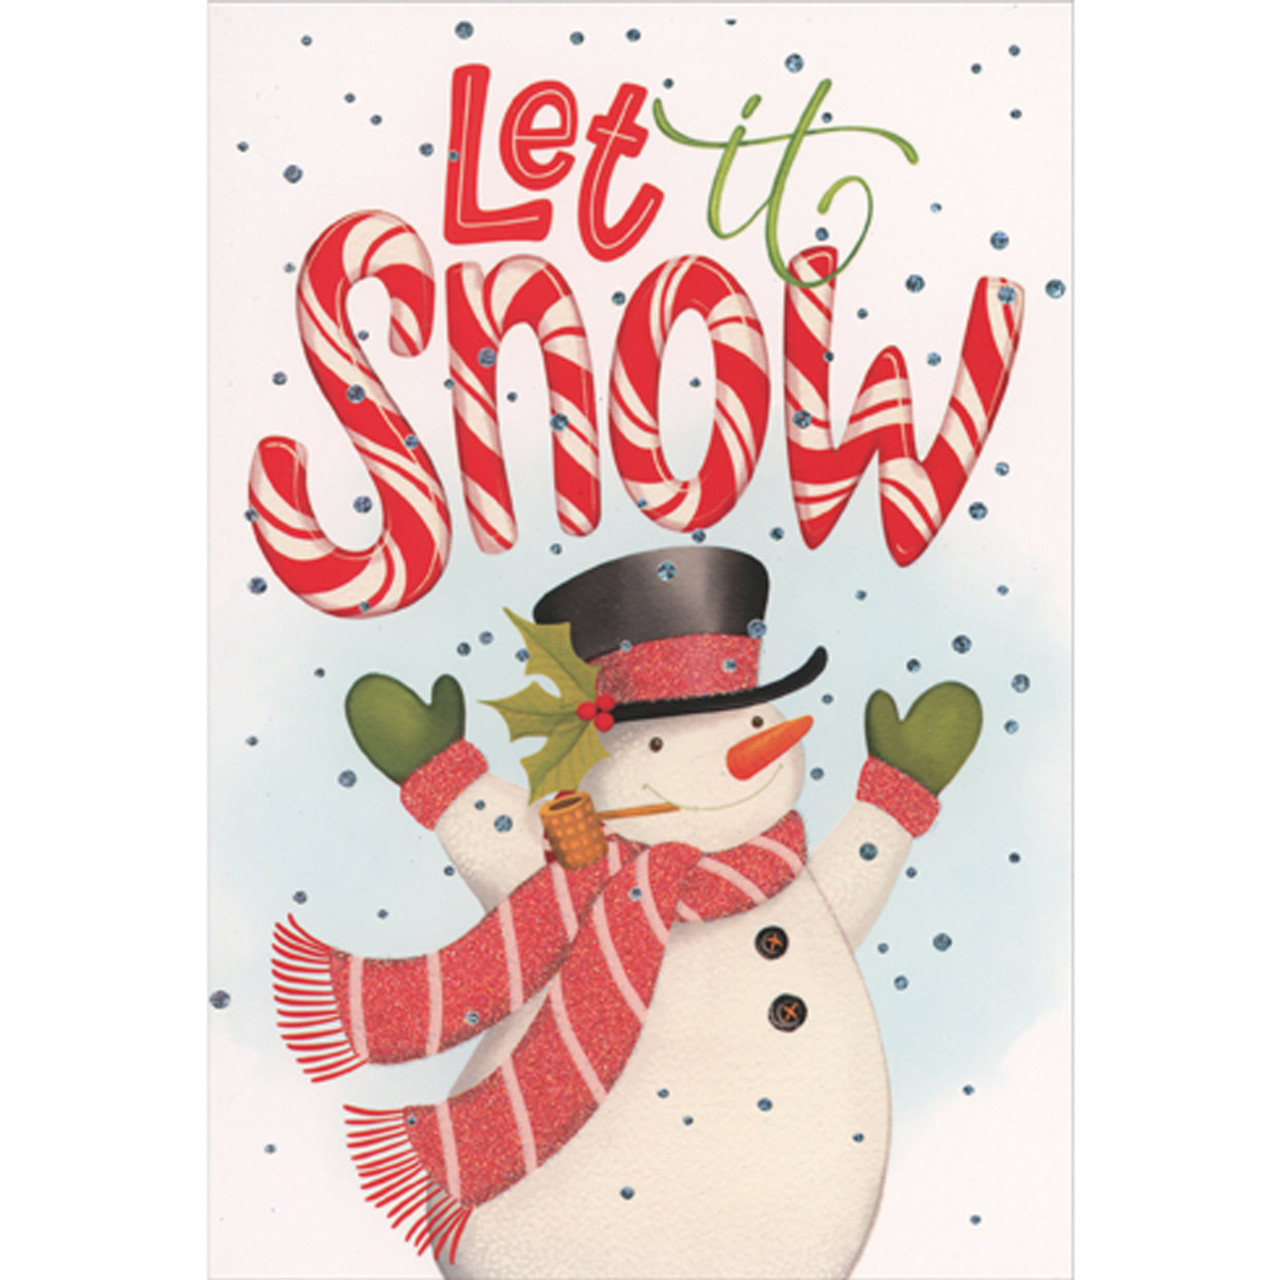 Keep It Simple” Christmas Card • David Arms